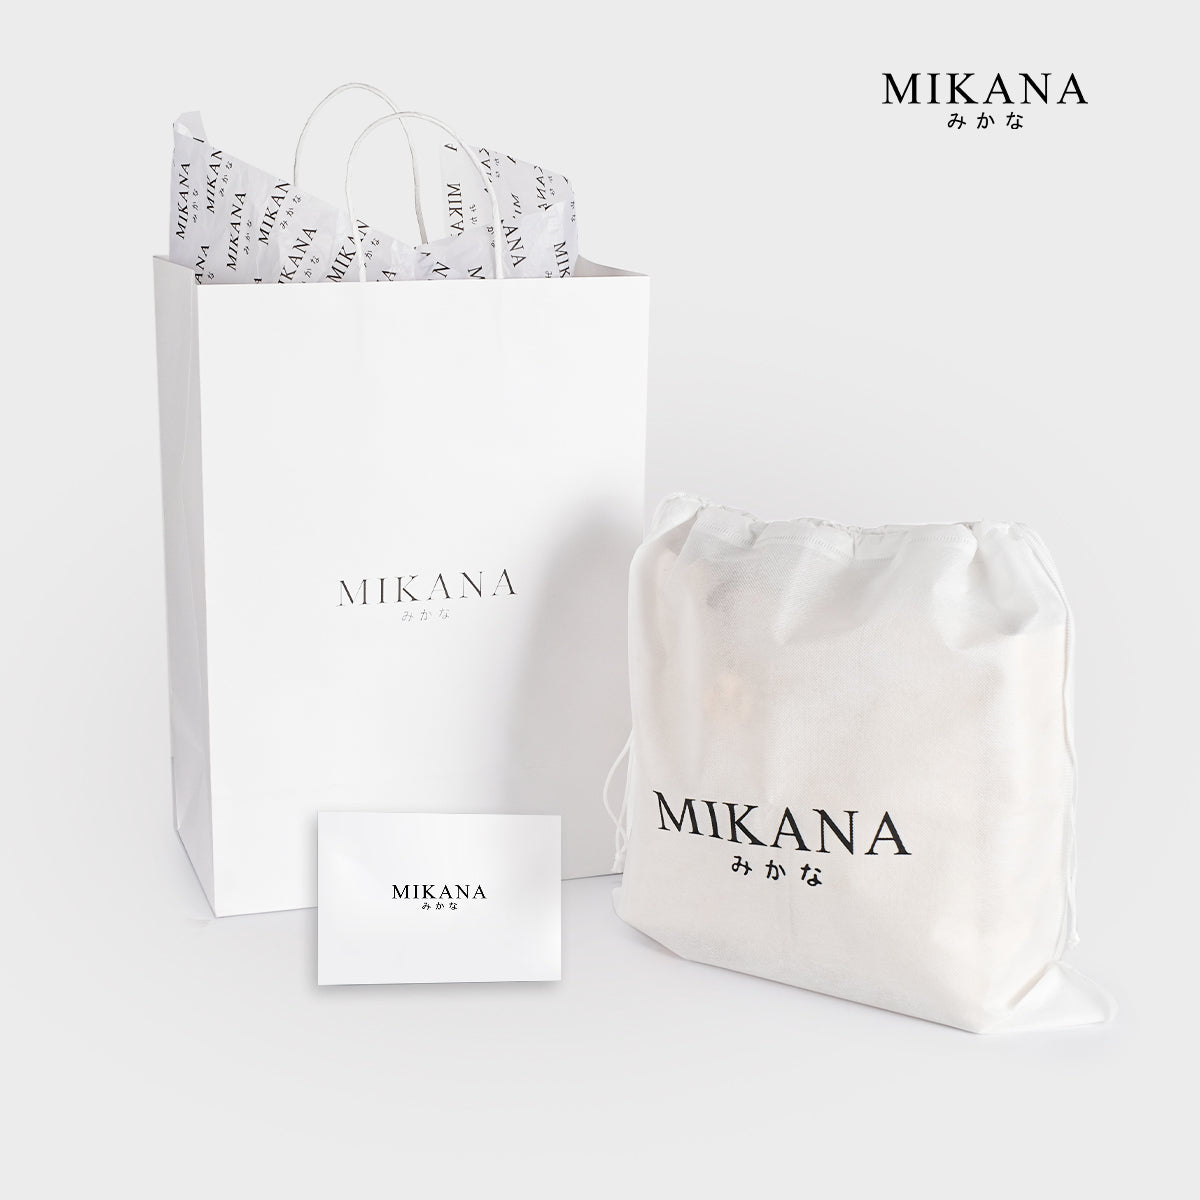 Mikana Ichikawa Tote Bag Shoulder Bag for Women